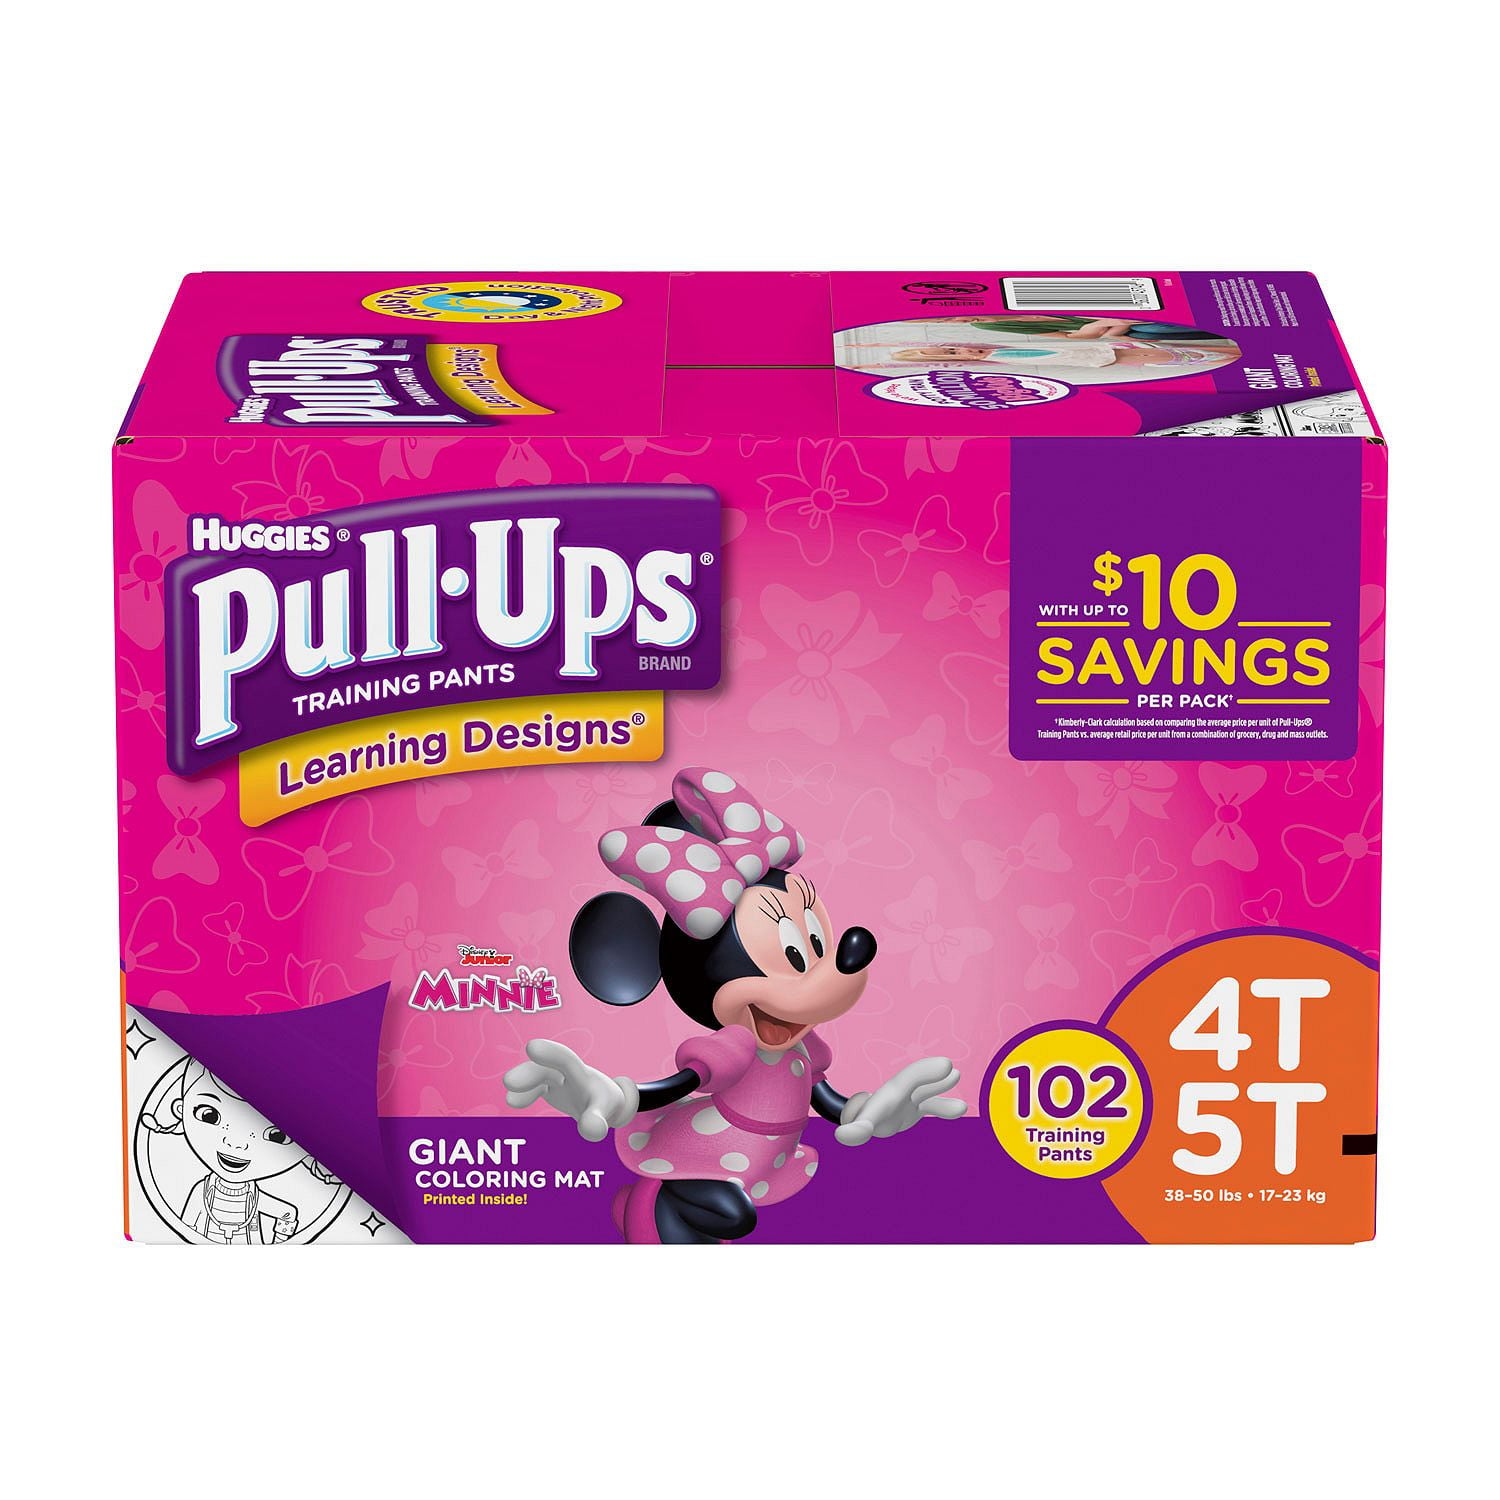 Huggies Pull-ups Training Pants for Girls Size 4T/5T ( Weight 102 ct.) -  Bulk Qty, Free Shipping - Comfortable, Soft, No - Walmart.com